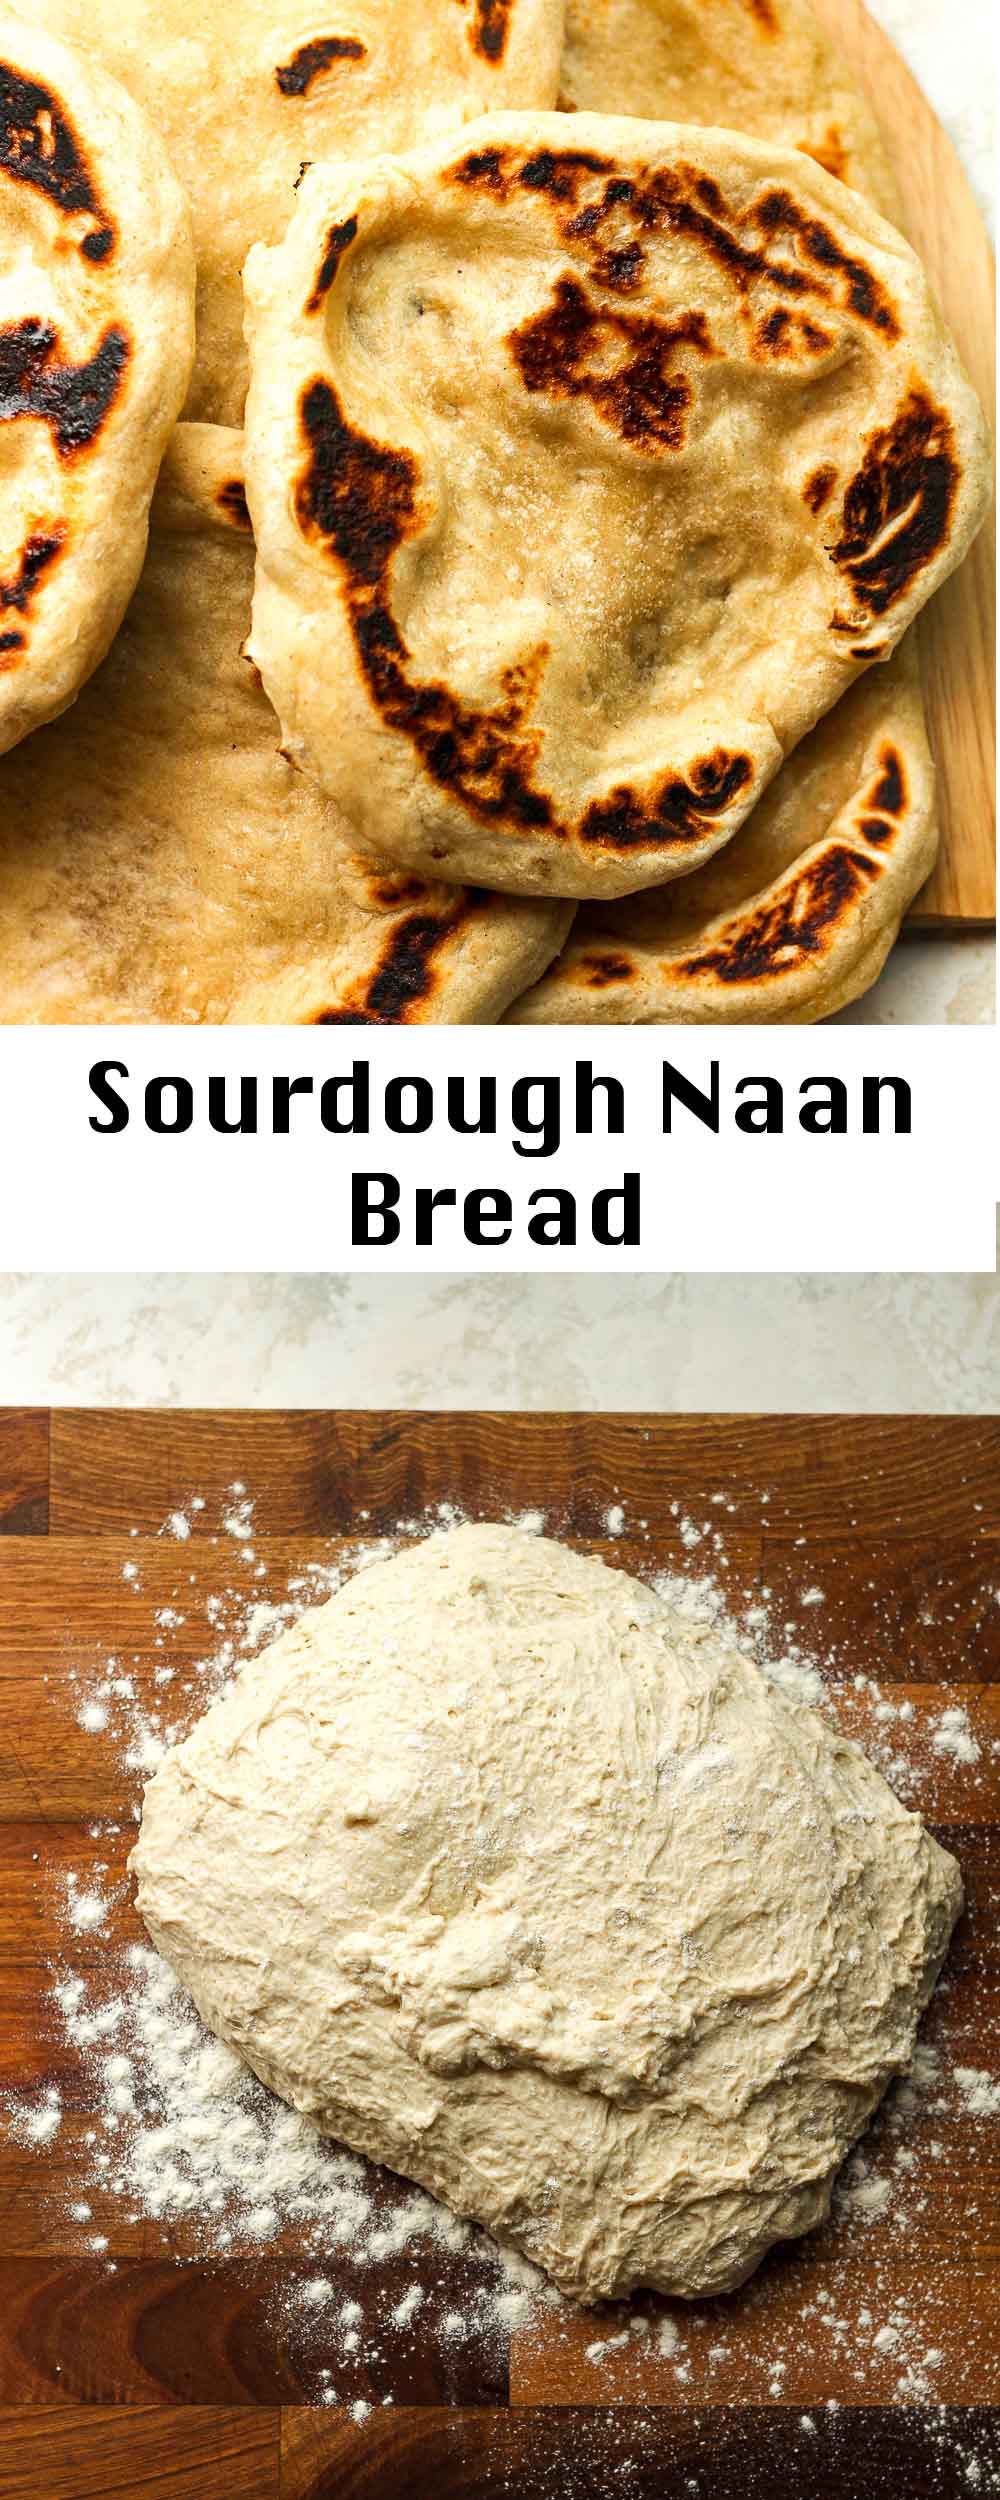 A collage of sourdough naan bread.